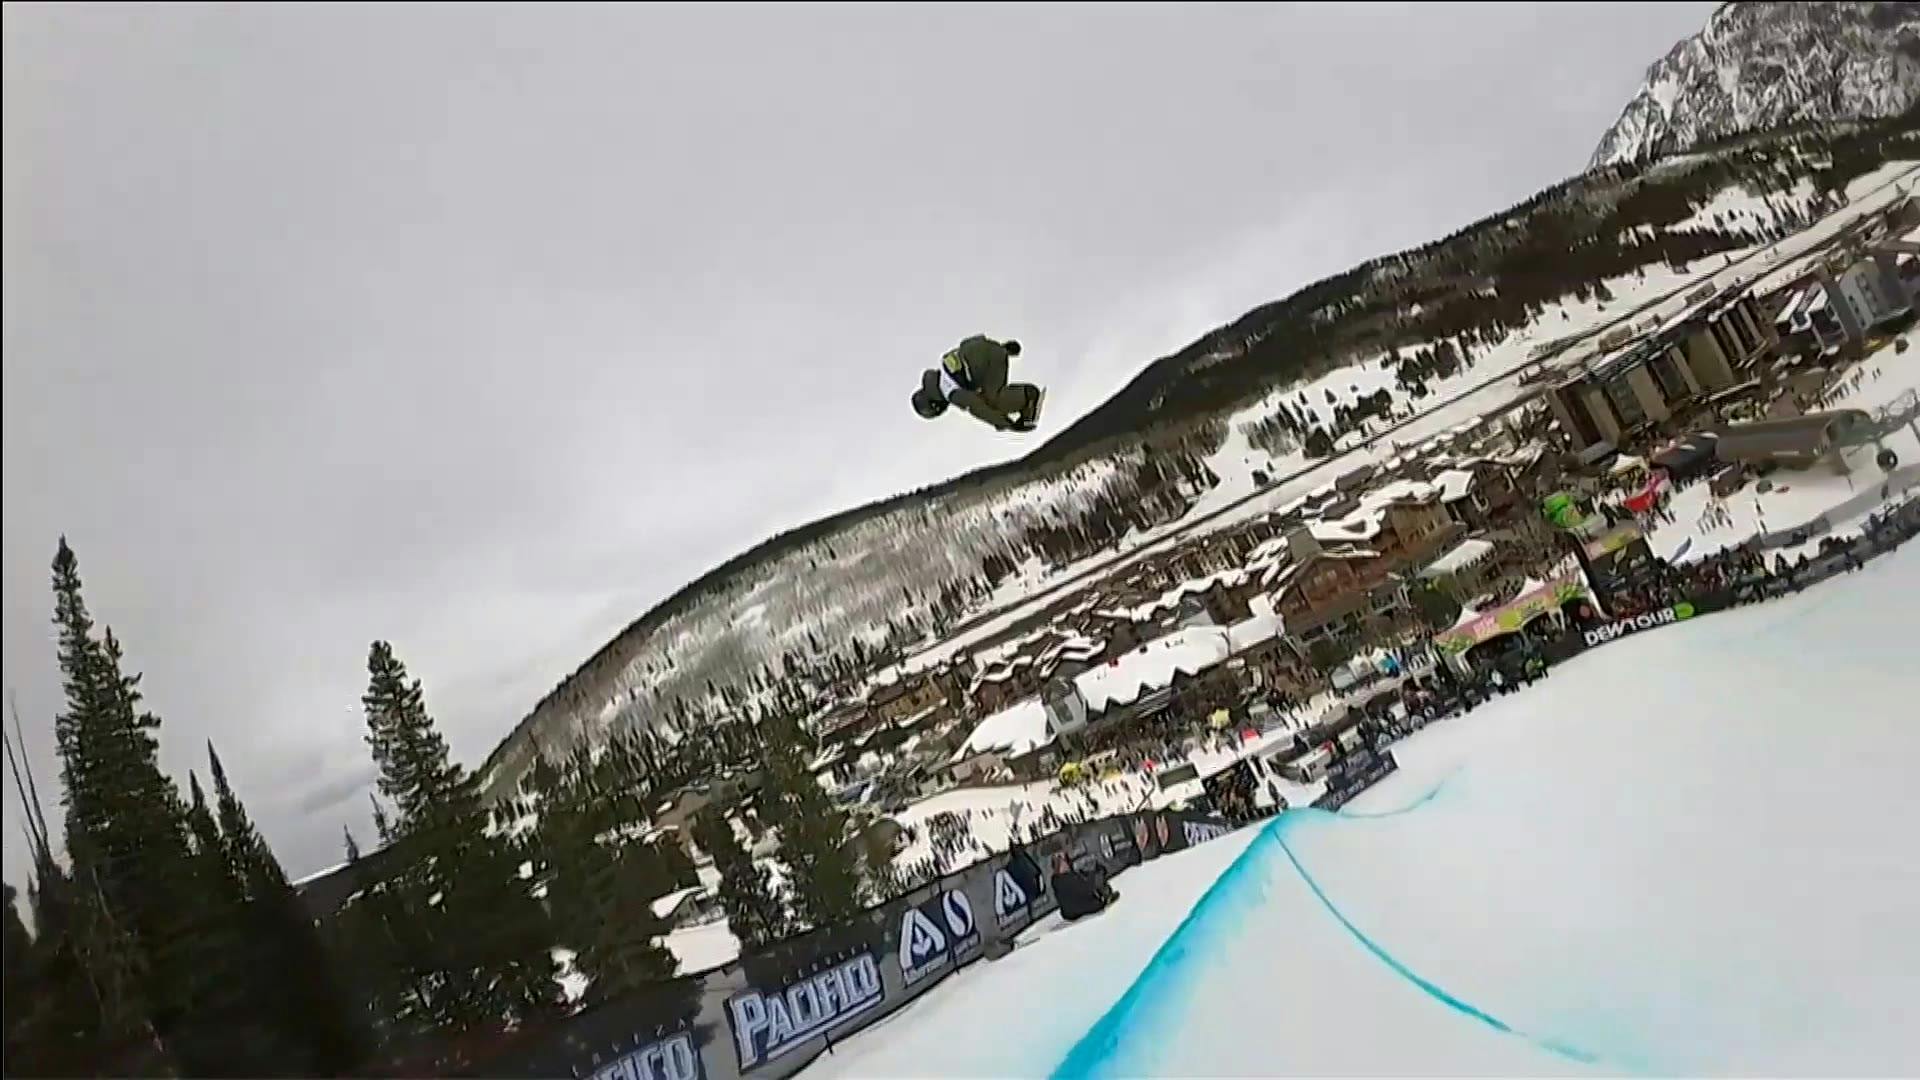 Dew Tour Copper Mountain Men’s Snowboard Superpipe Final/Superpipe High Air & Best Trick Jam | Dew Tour